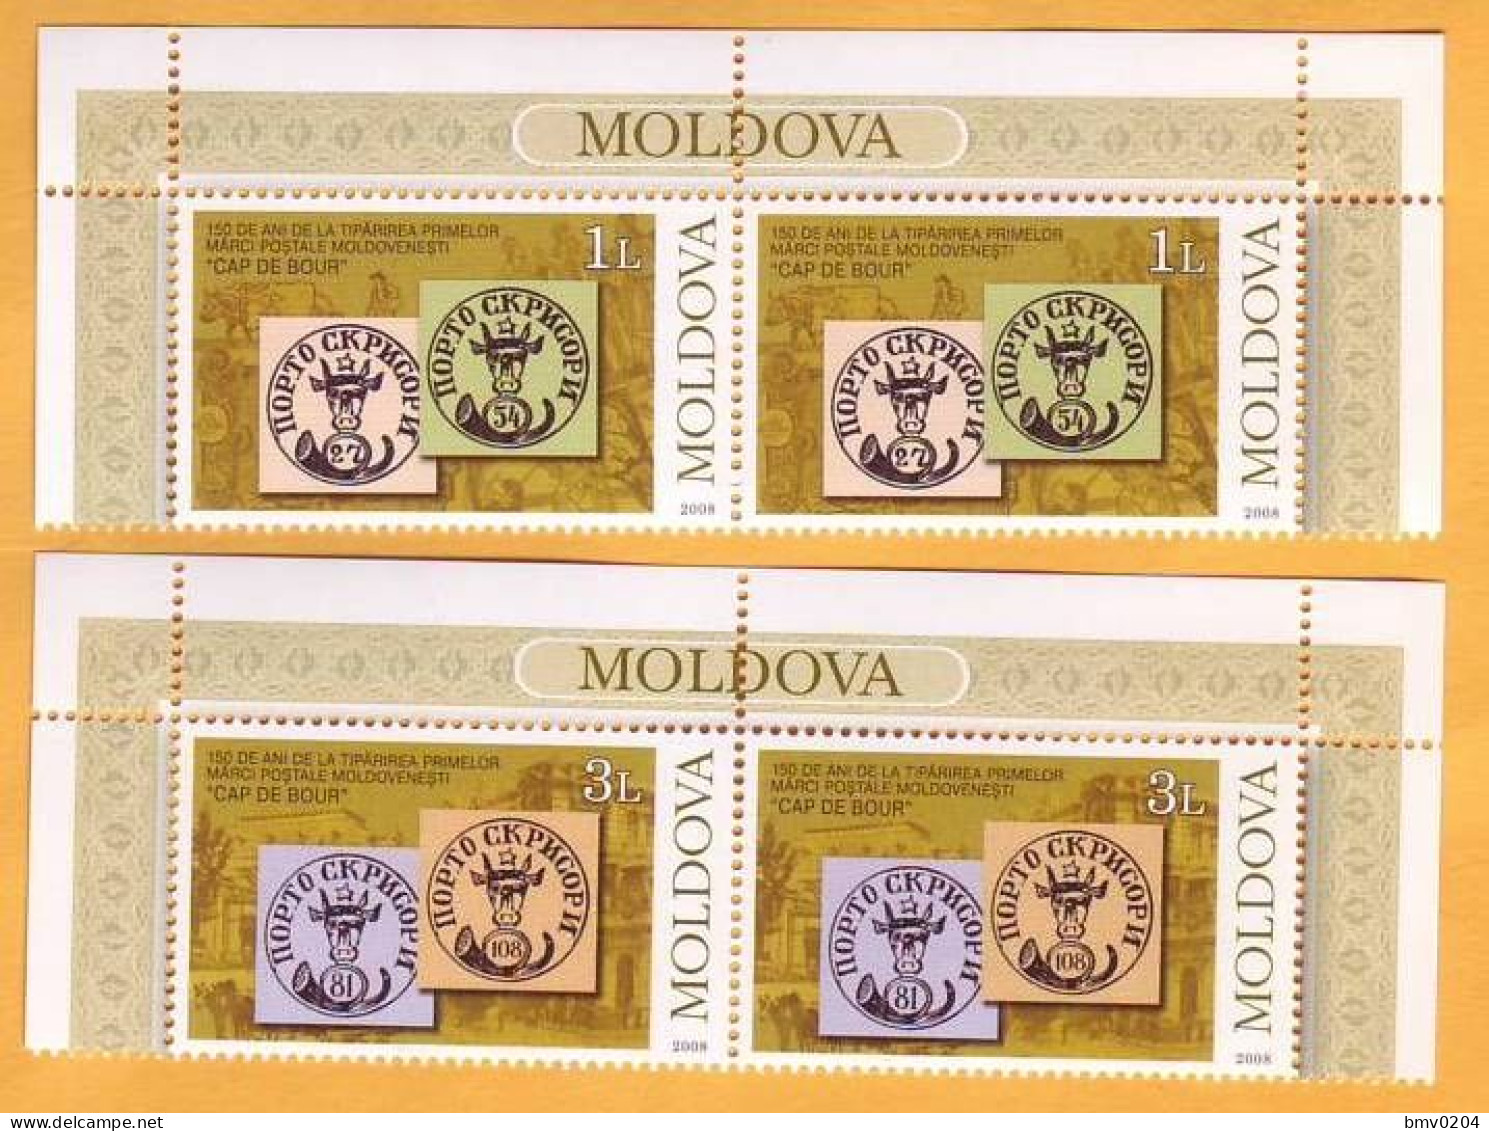 2008 Moldova Moldavie 150. Edition Of The First Postage Stamps Of The Moldavian Principality "Cap De Bour" 2x2v Mint. - Moldova